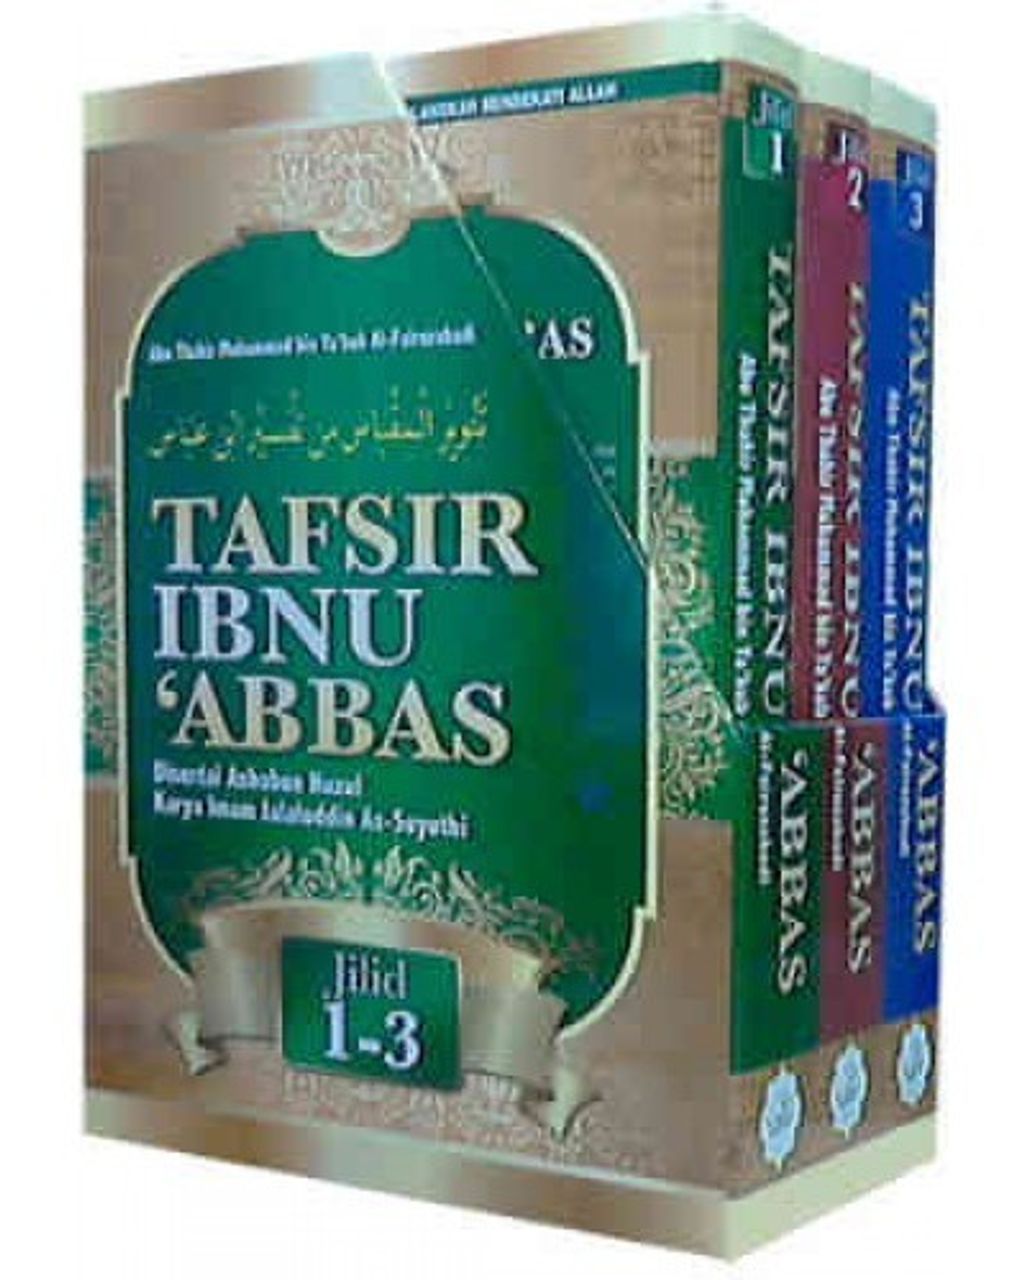 tafsir-ibnu-abbas-3-jilid-set-kitab-400x500.jpg